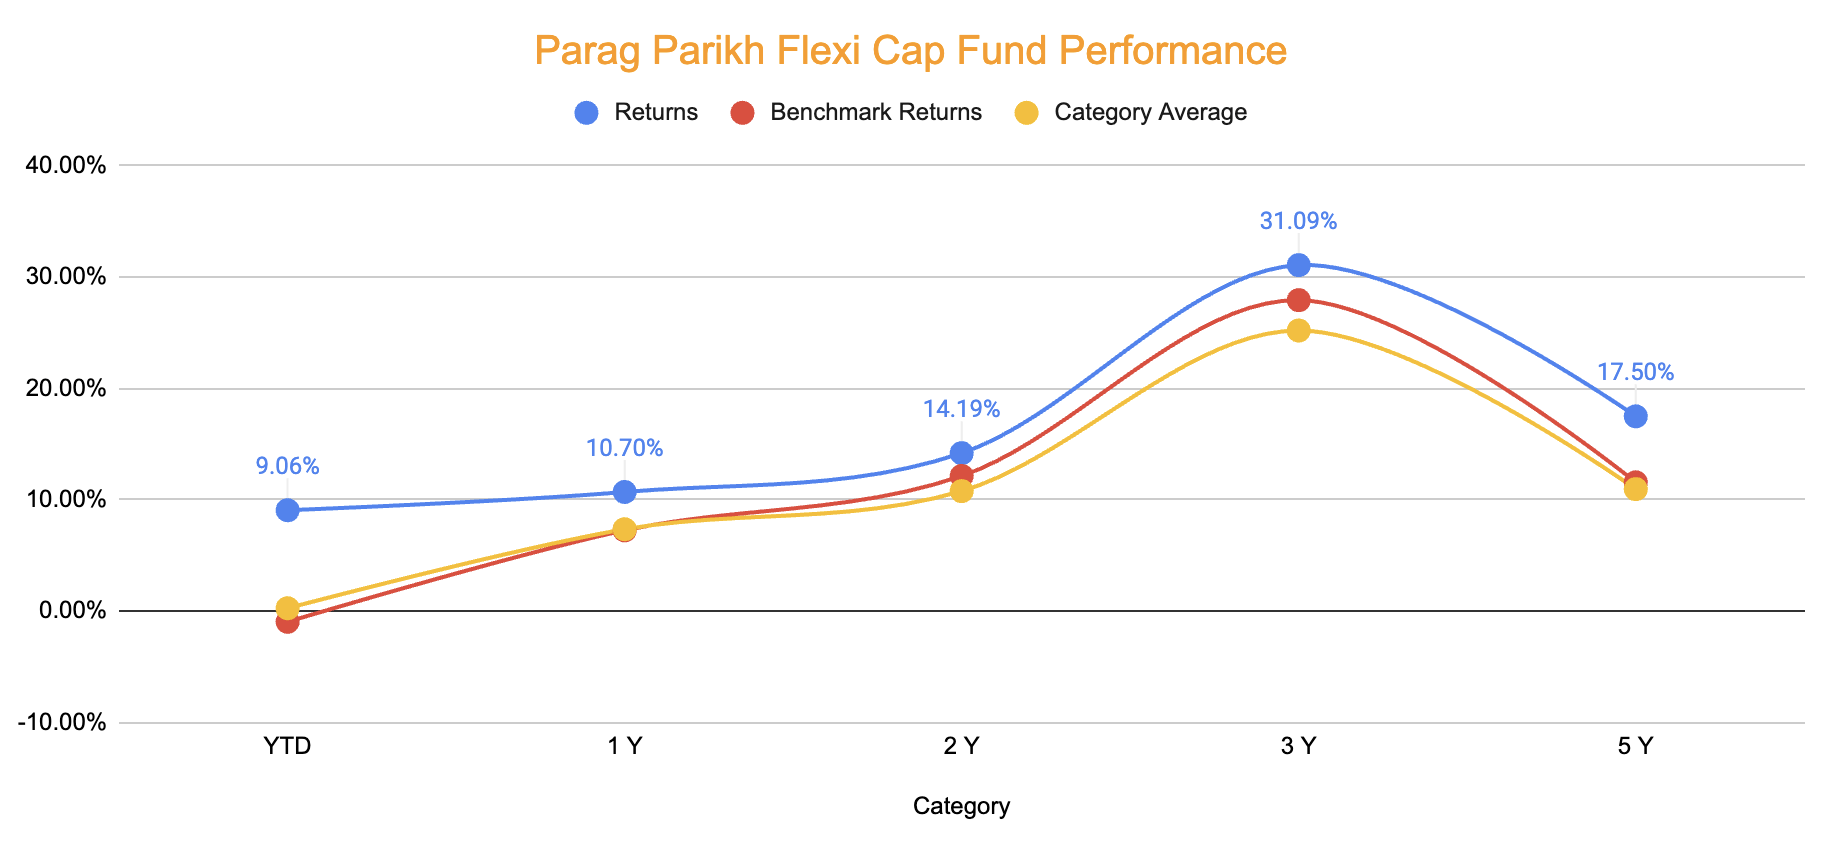 parag-parikh-flexi-cap-fund-portfolio-performance-review